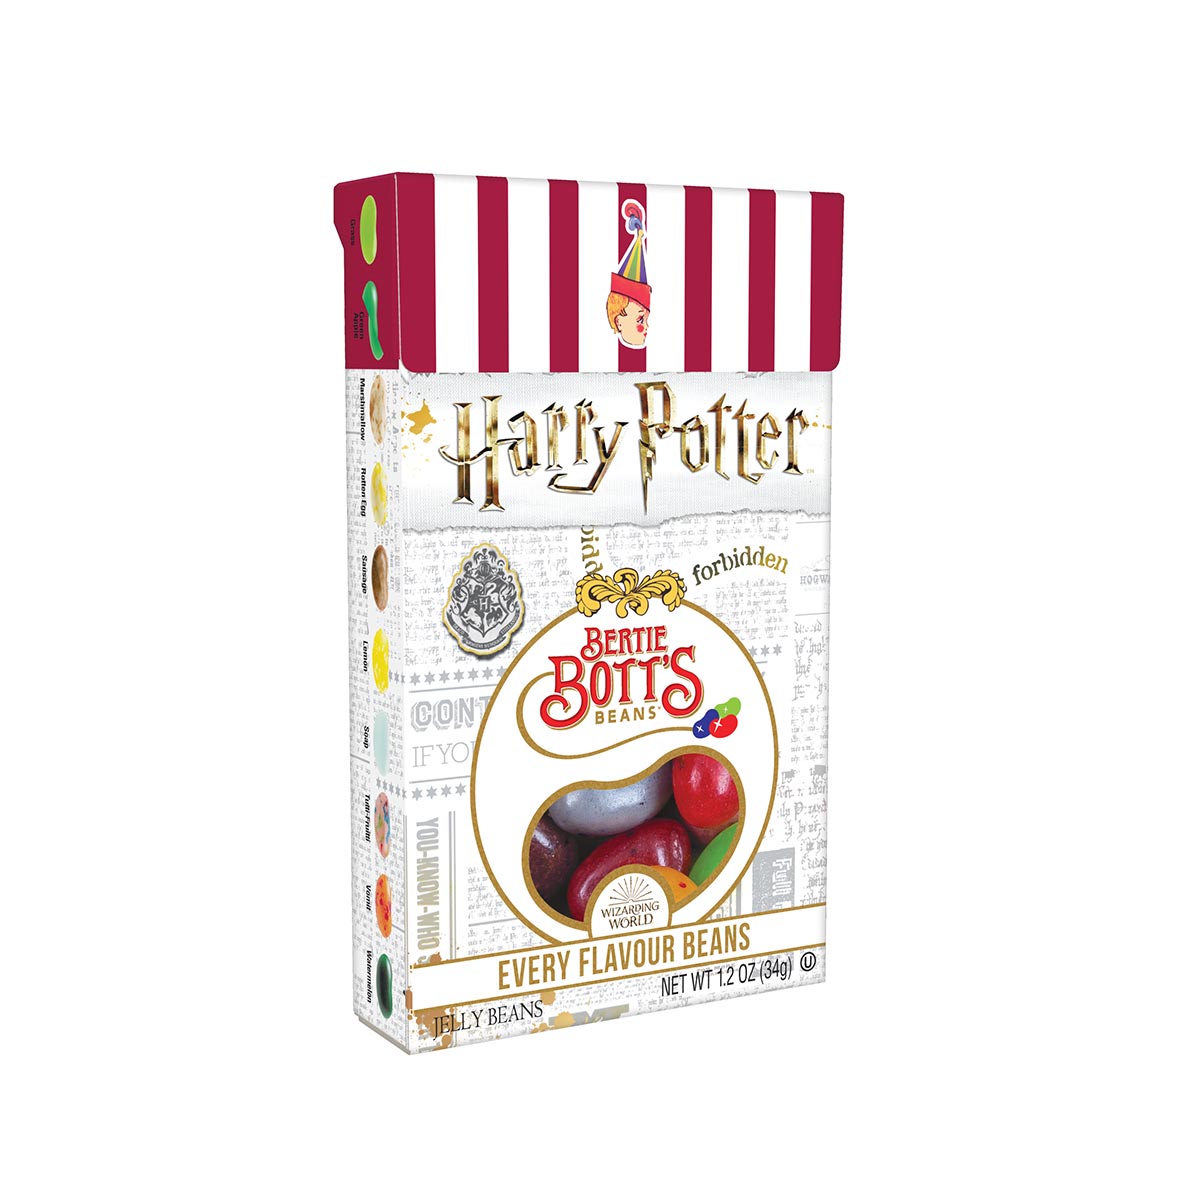 Bertie Botts Every Flavor Beans (Harry Potter) 1.2 oz Box candy